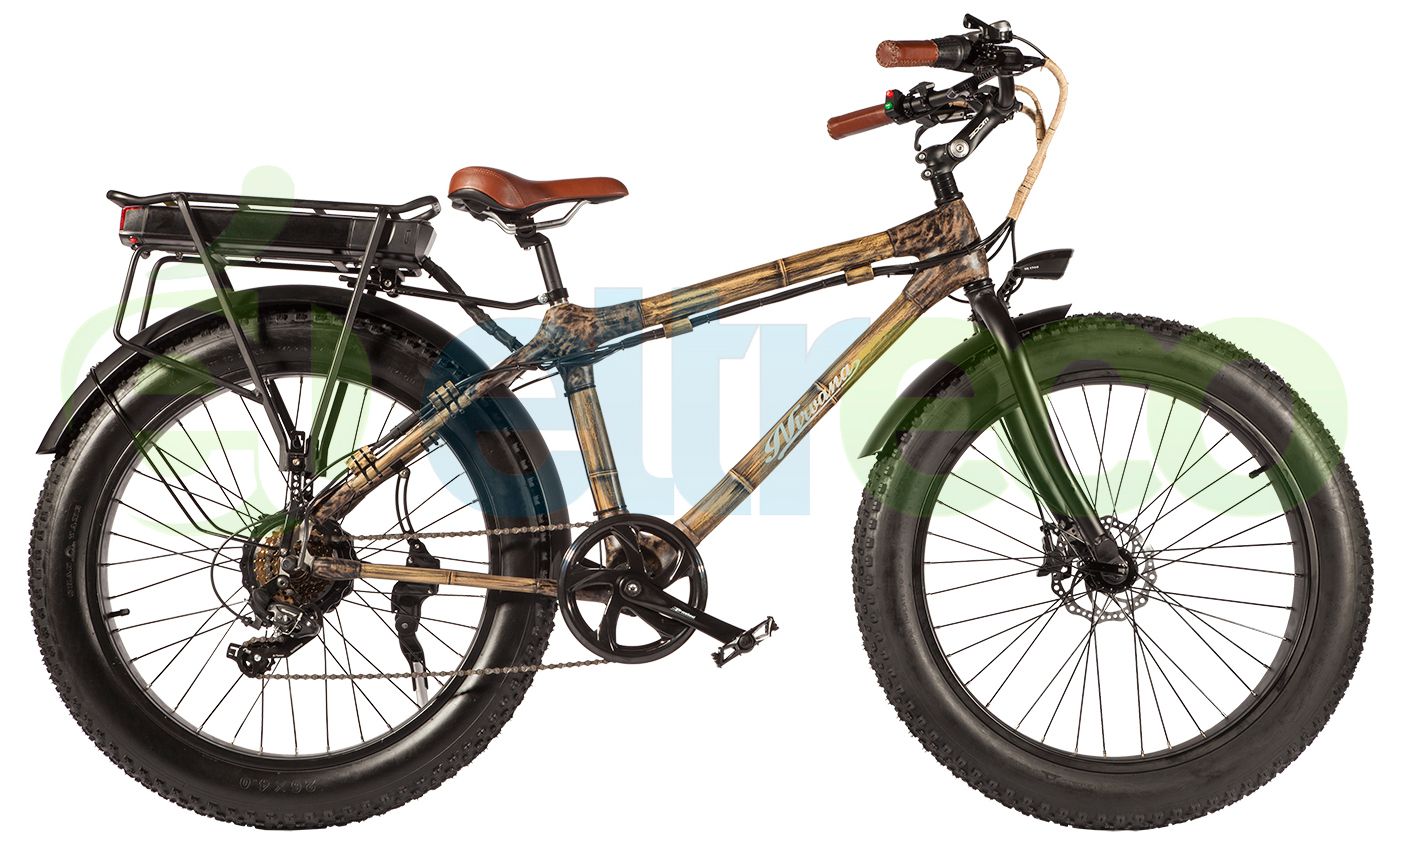  Отзывы о Горном велосипеде Eltreco Bamboo 2017